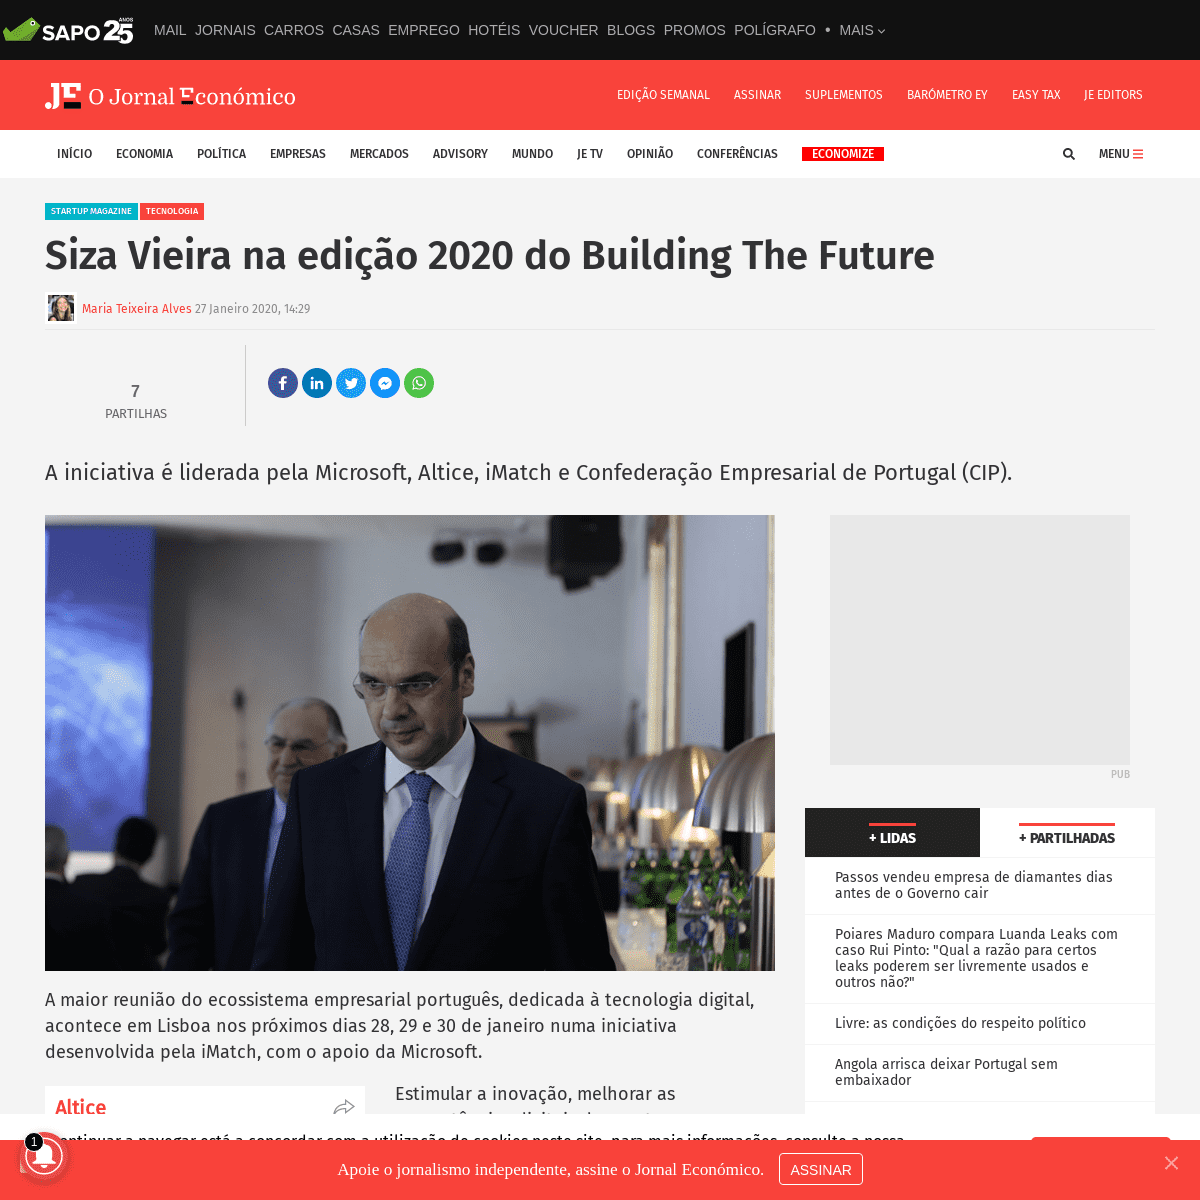 A complete backup of jornaleconomico.sapo.pt/noticias/siza-vieira-na-edicao-2020-do-building-the-future-540532